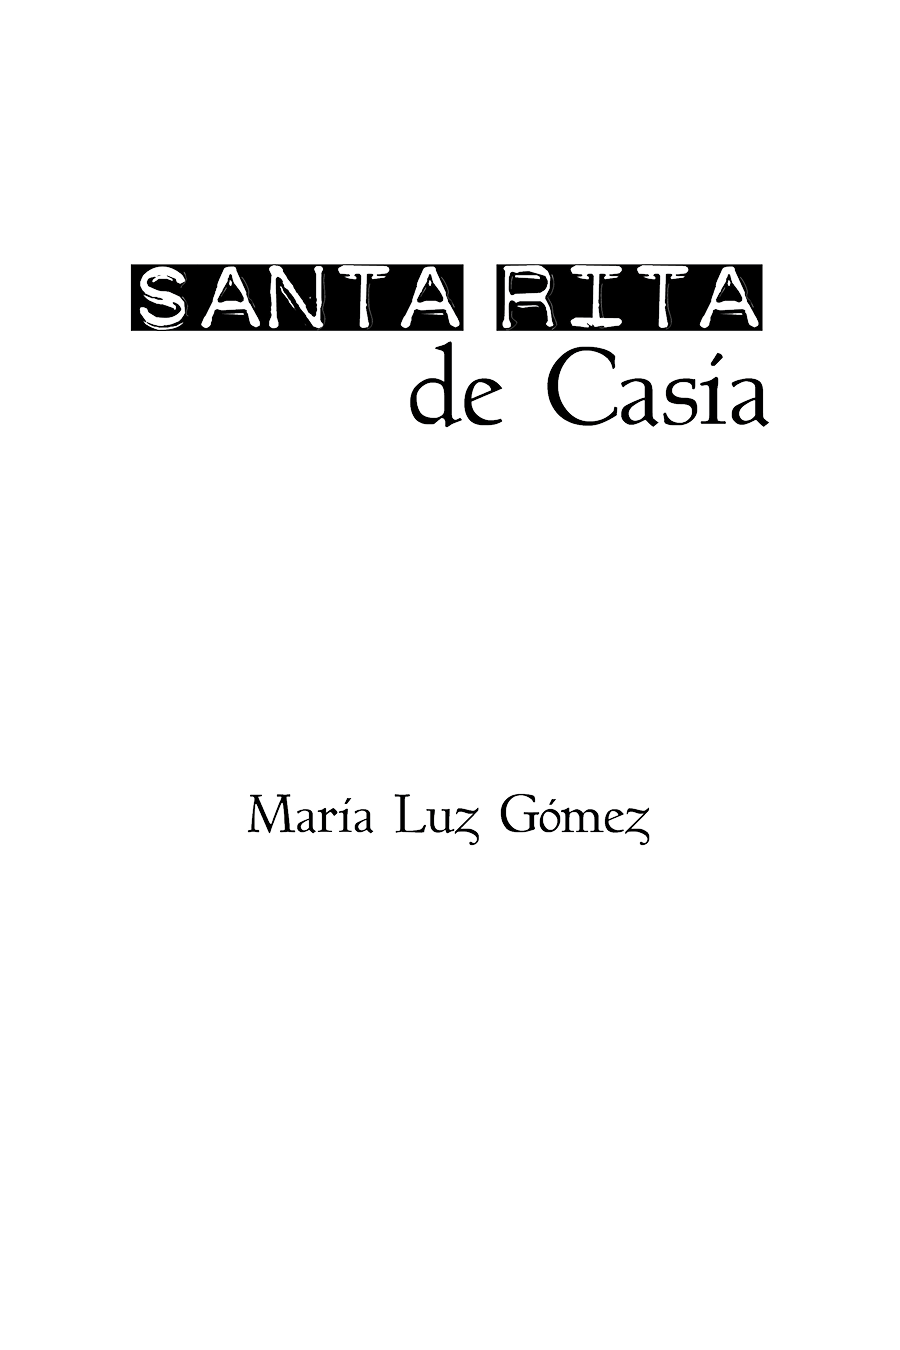 S anta Rita de Casia Primera edición agosto 2018 ISBN 9788417533311 ISBN - photo 1